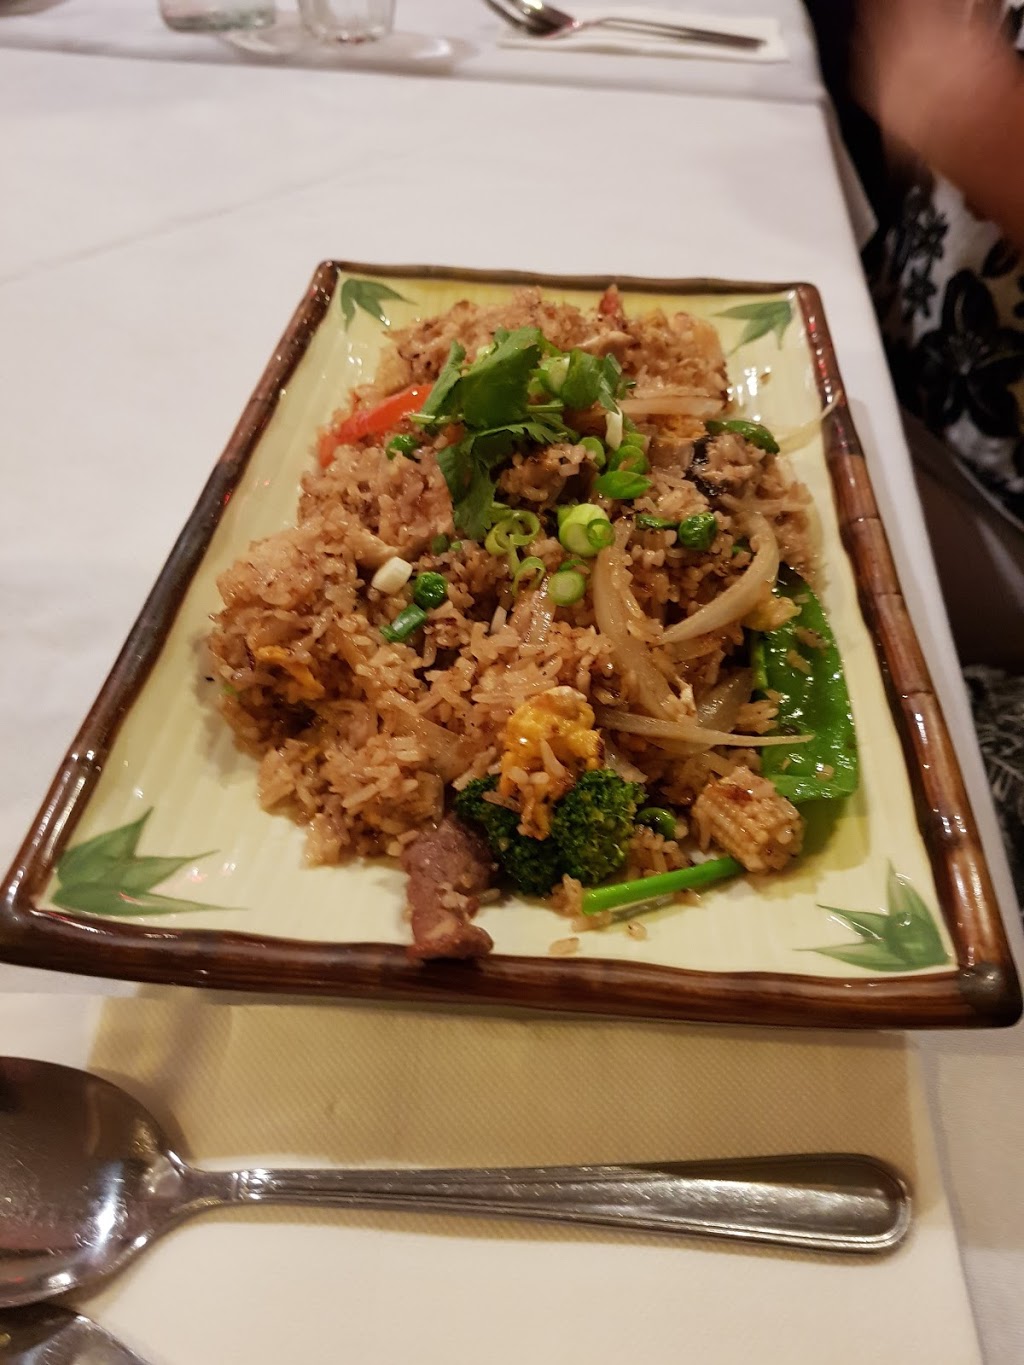 Siam Bayside Thai Restaurant | 4/506 Nepean Hwy, Frankston VIC 3199, Australia | Phone: (03) 9783 8310